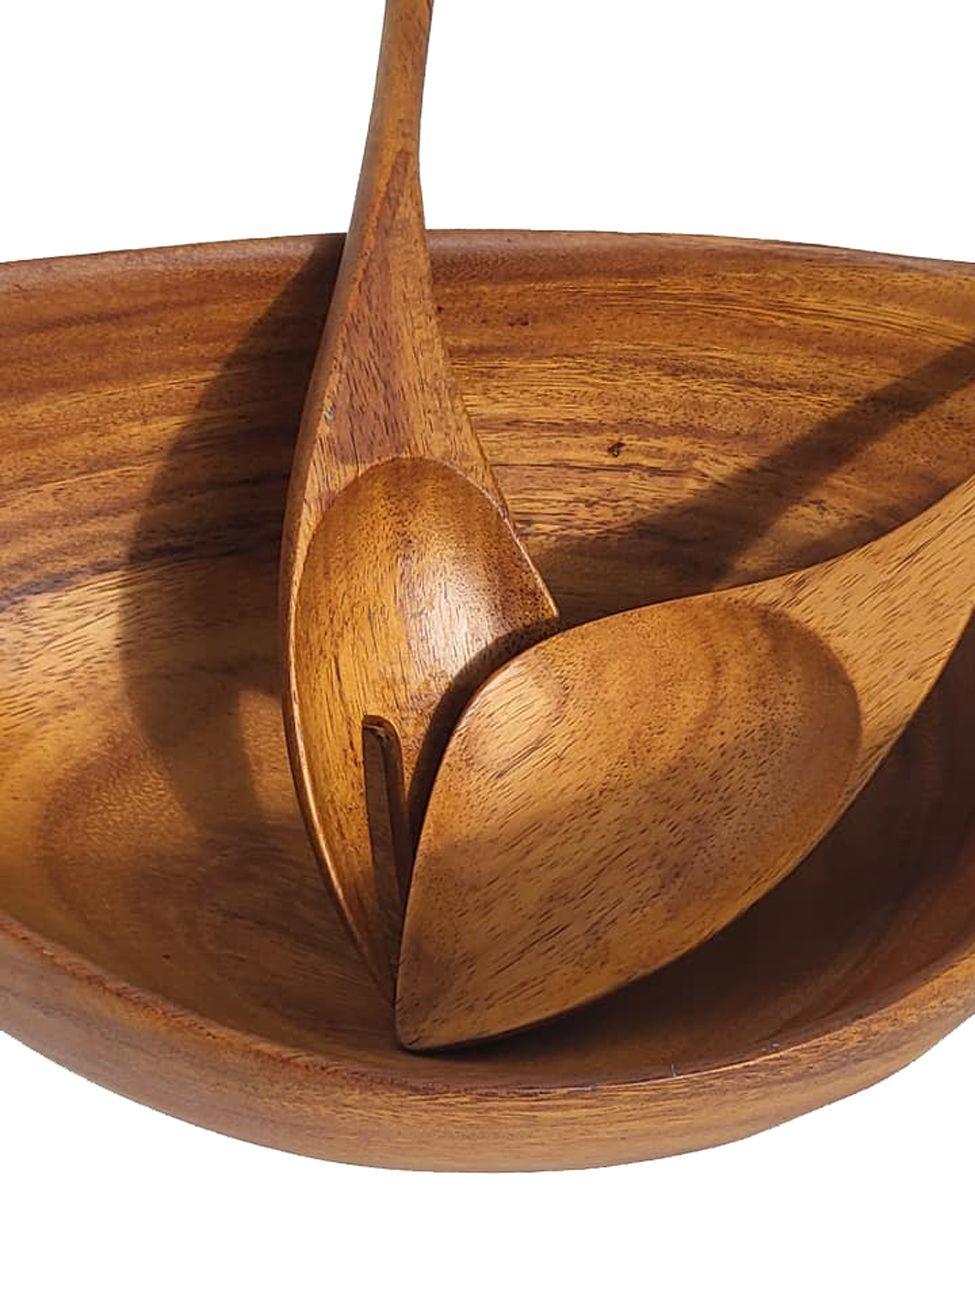 20th Century Arthur Umanoff Midcentury Carved Wood Salad Set, Bowls and Serving Utensils For Sale